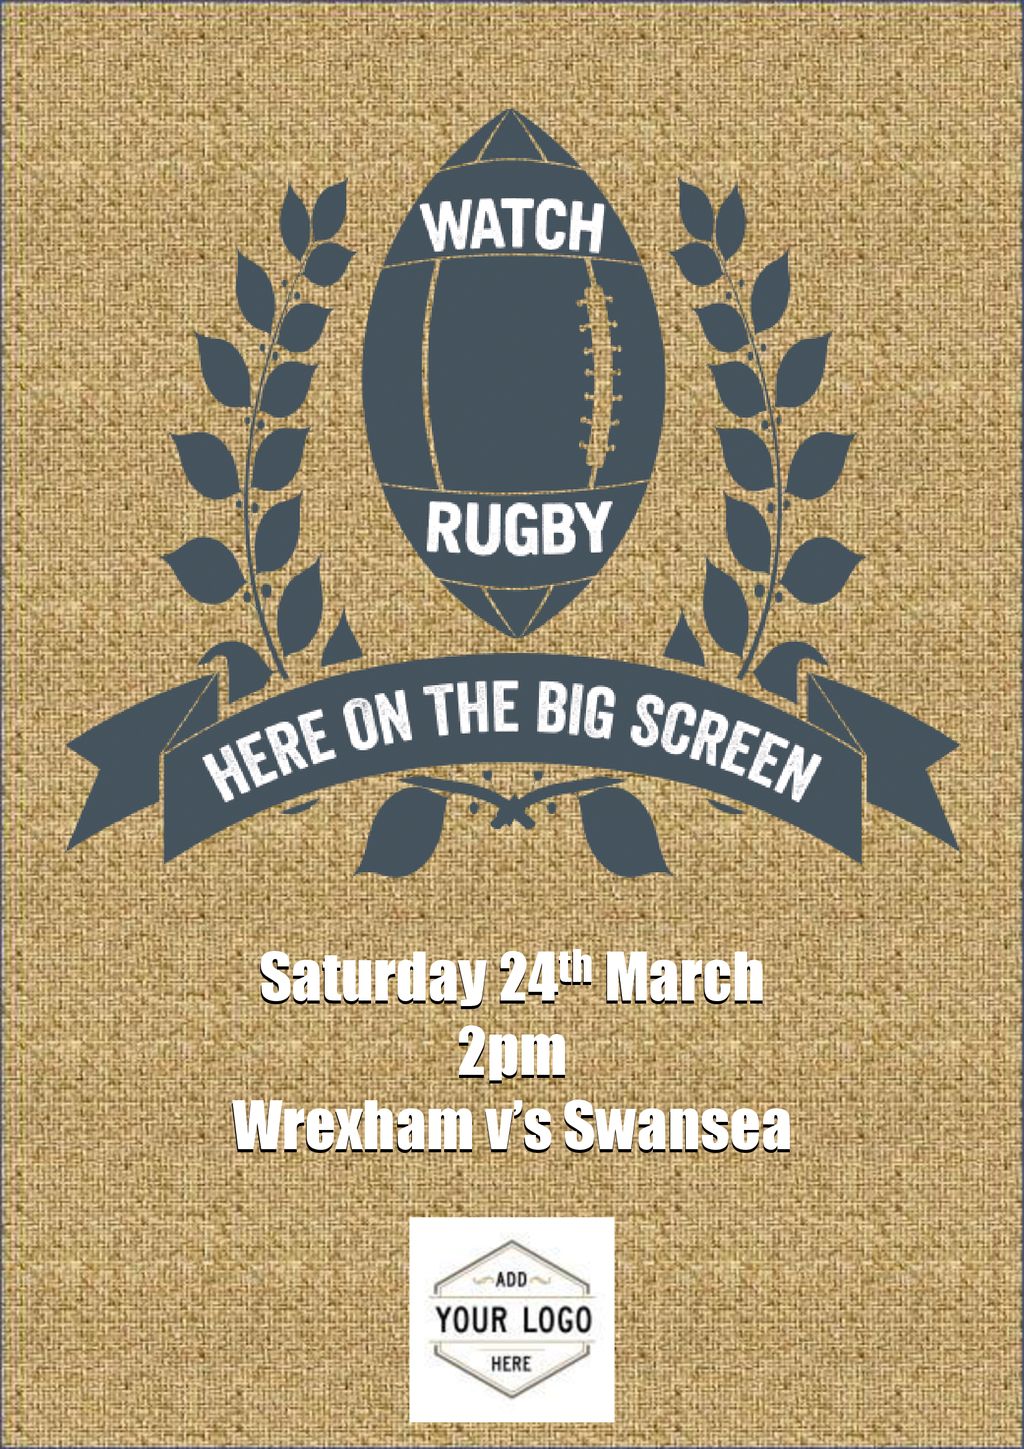 Saturday 24th March 2pm Wrexham v’s Swansea Saturday 24th March 2pm Wrexham v’s Swansea